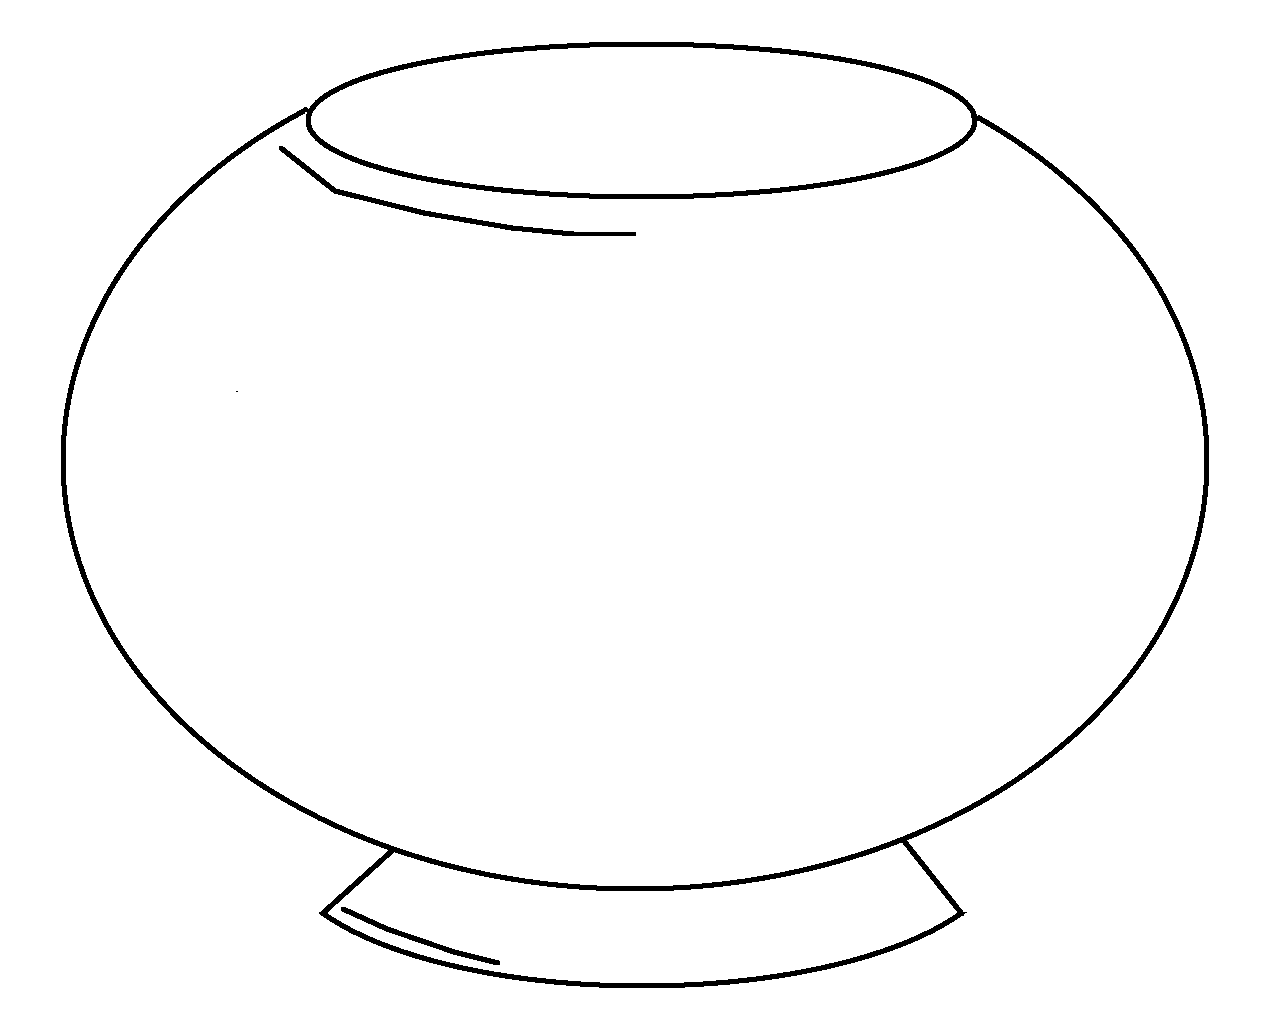 Fish Bowl clipart #2, Download drawings